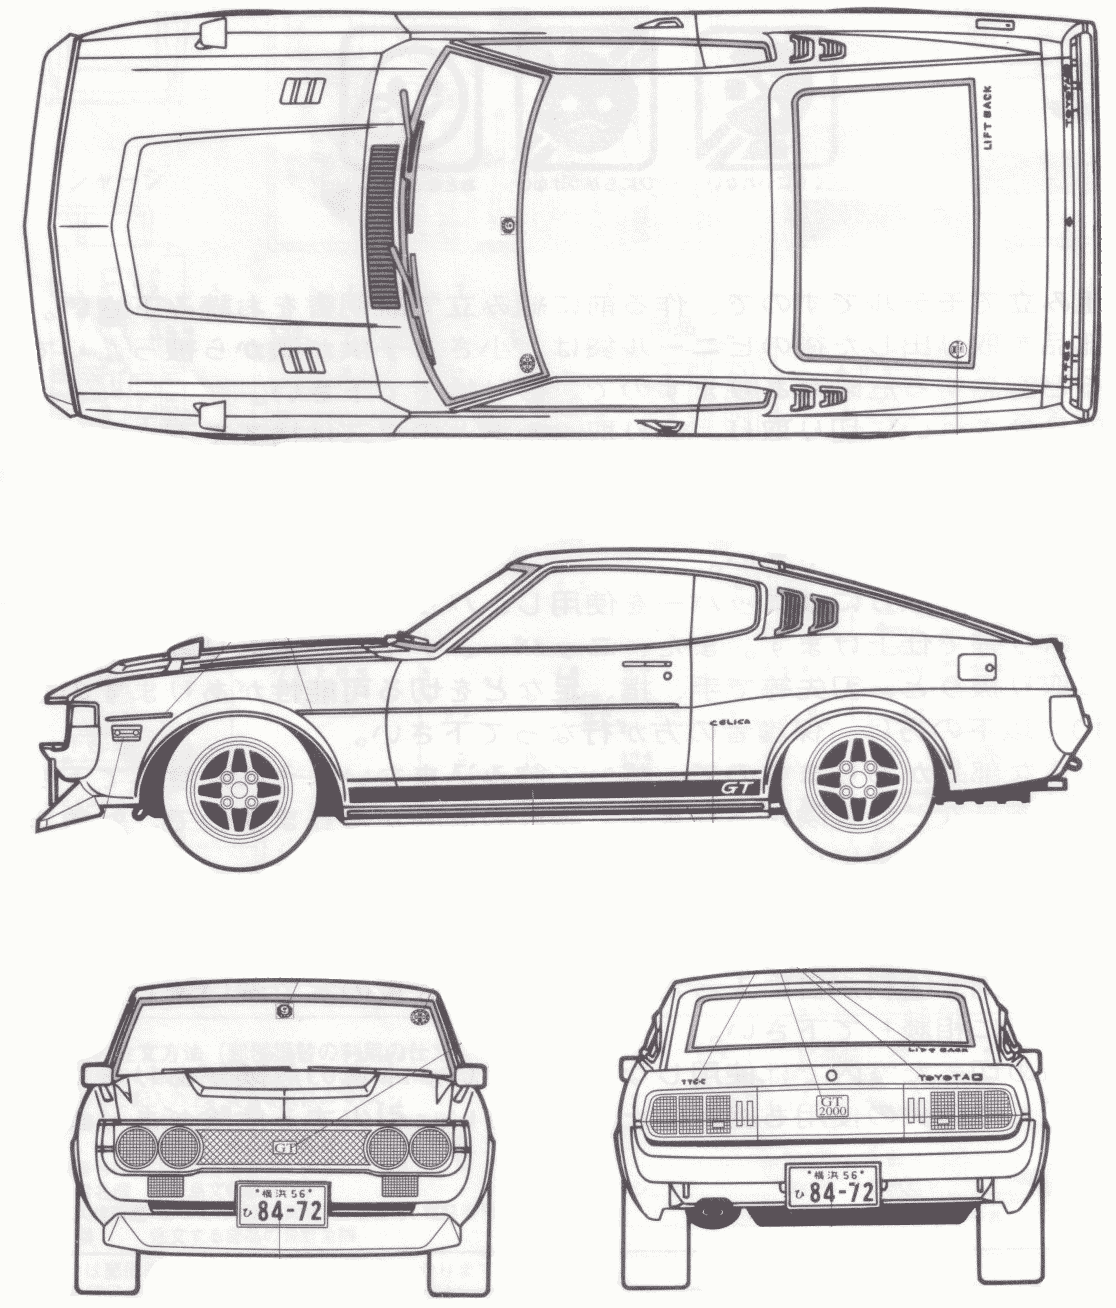 Toyota Celica LB 2000 GT blueprint